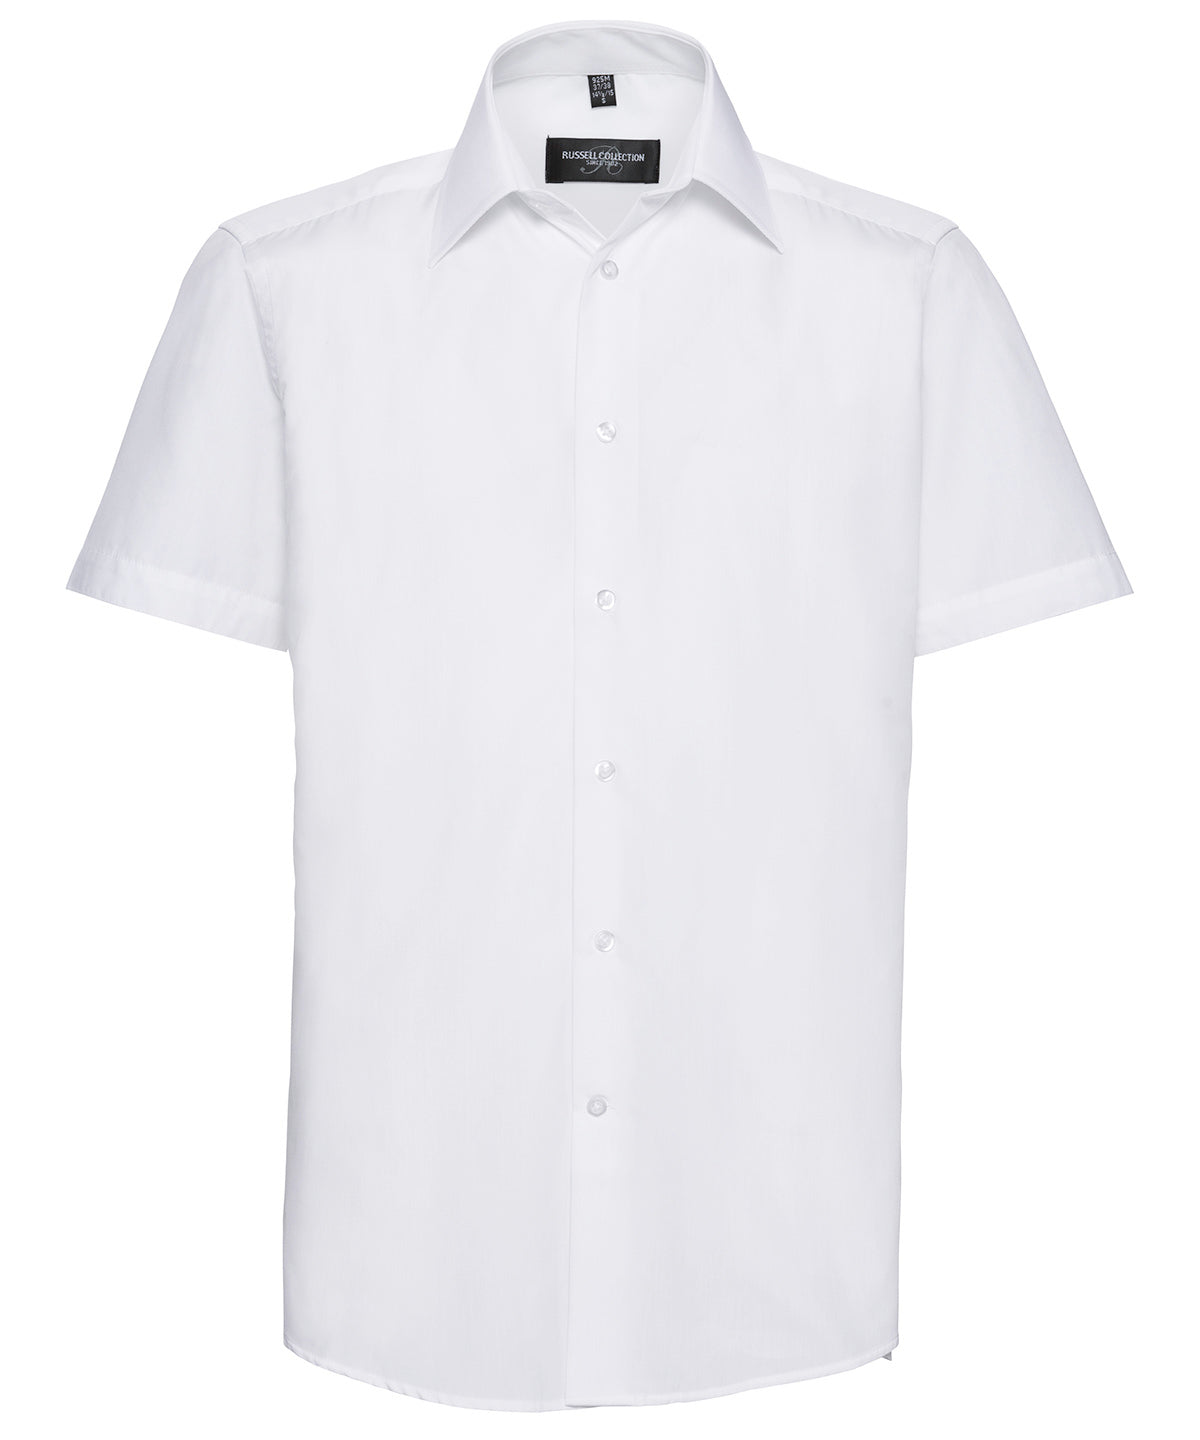 Bolir - Short Sleeve Polycotton Easycare Tailored Poplin Shirt